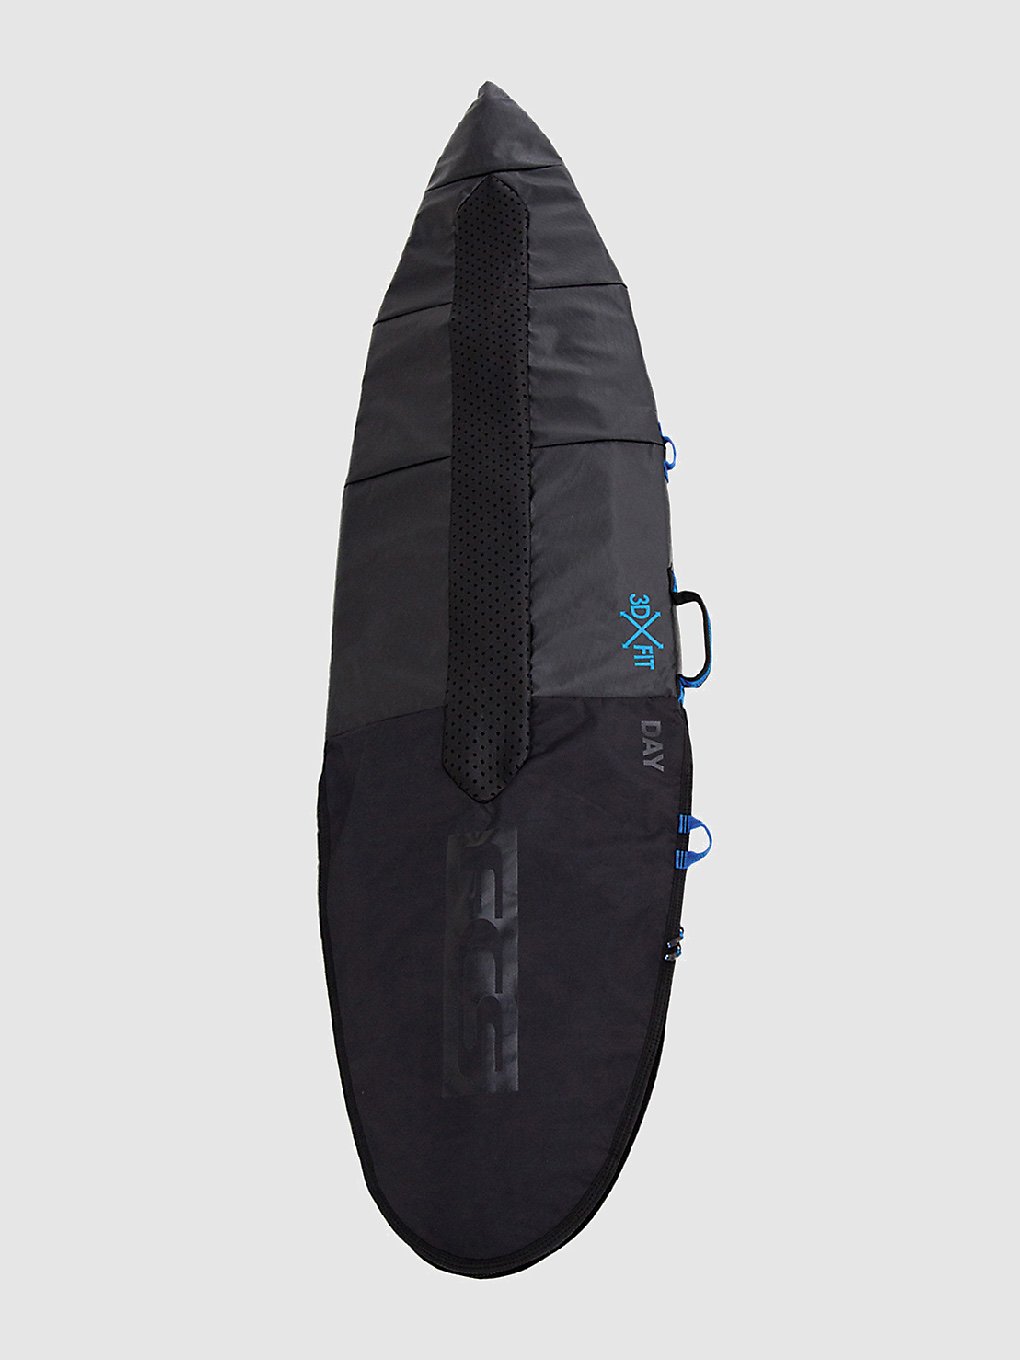 FCS Day All Purpose 6'0 Surfboard-Tasche black